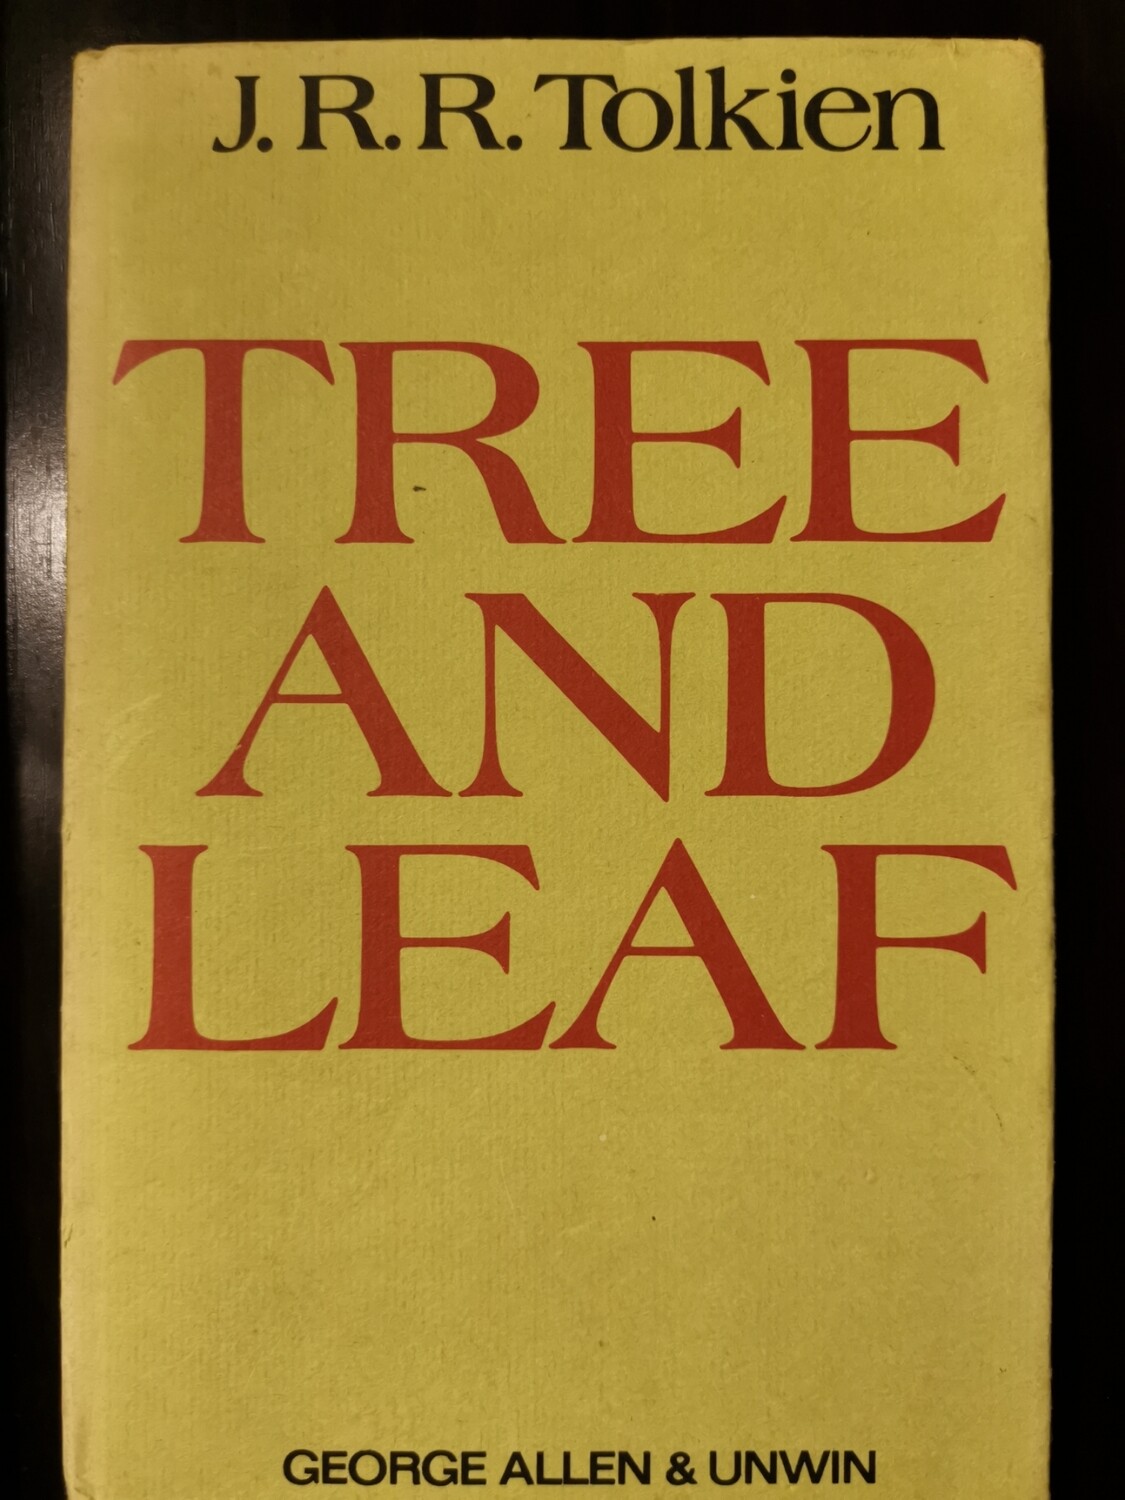 Tree and leaf, J R R Tolkien